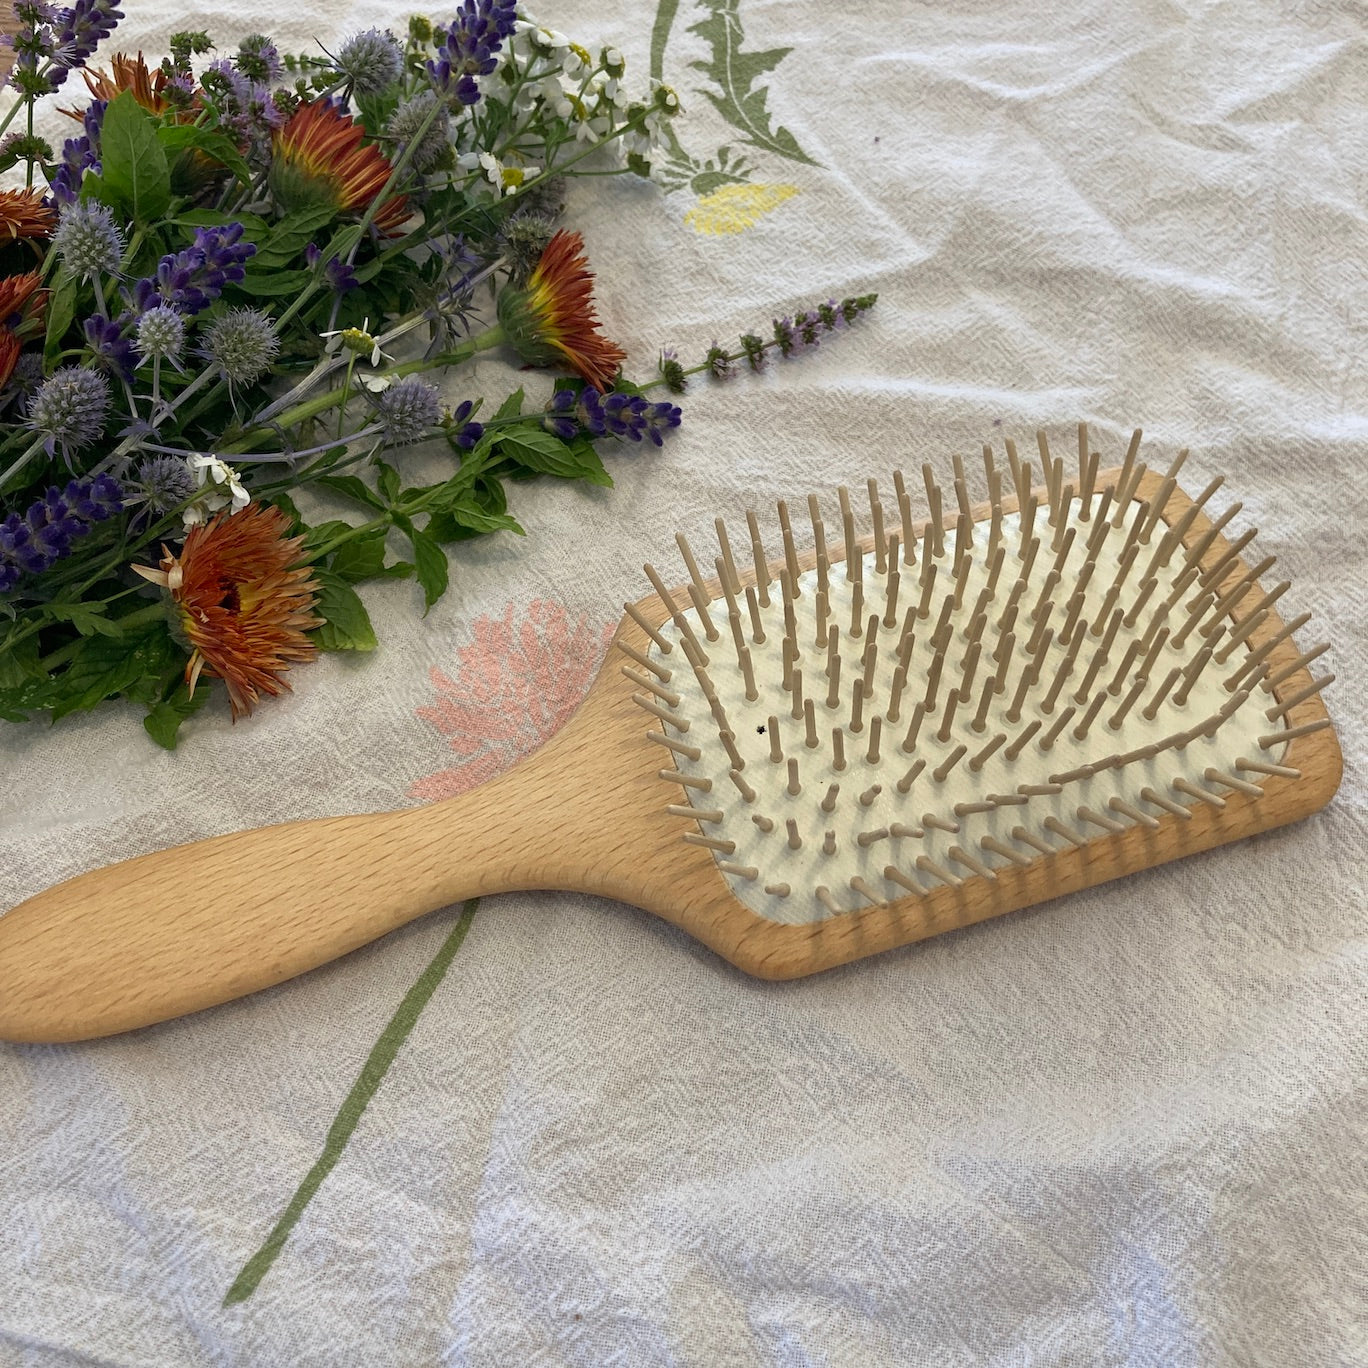 Hair Brush for Long Hair | Beechwood and Wooden Bristles